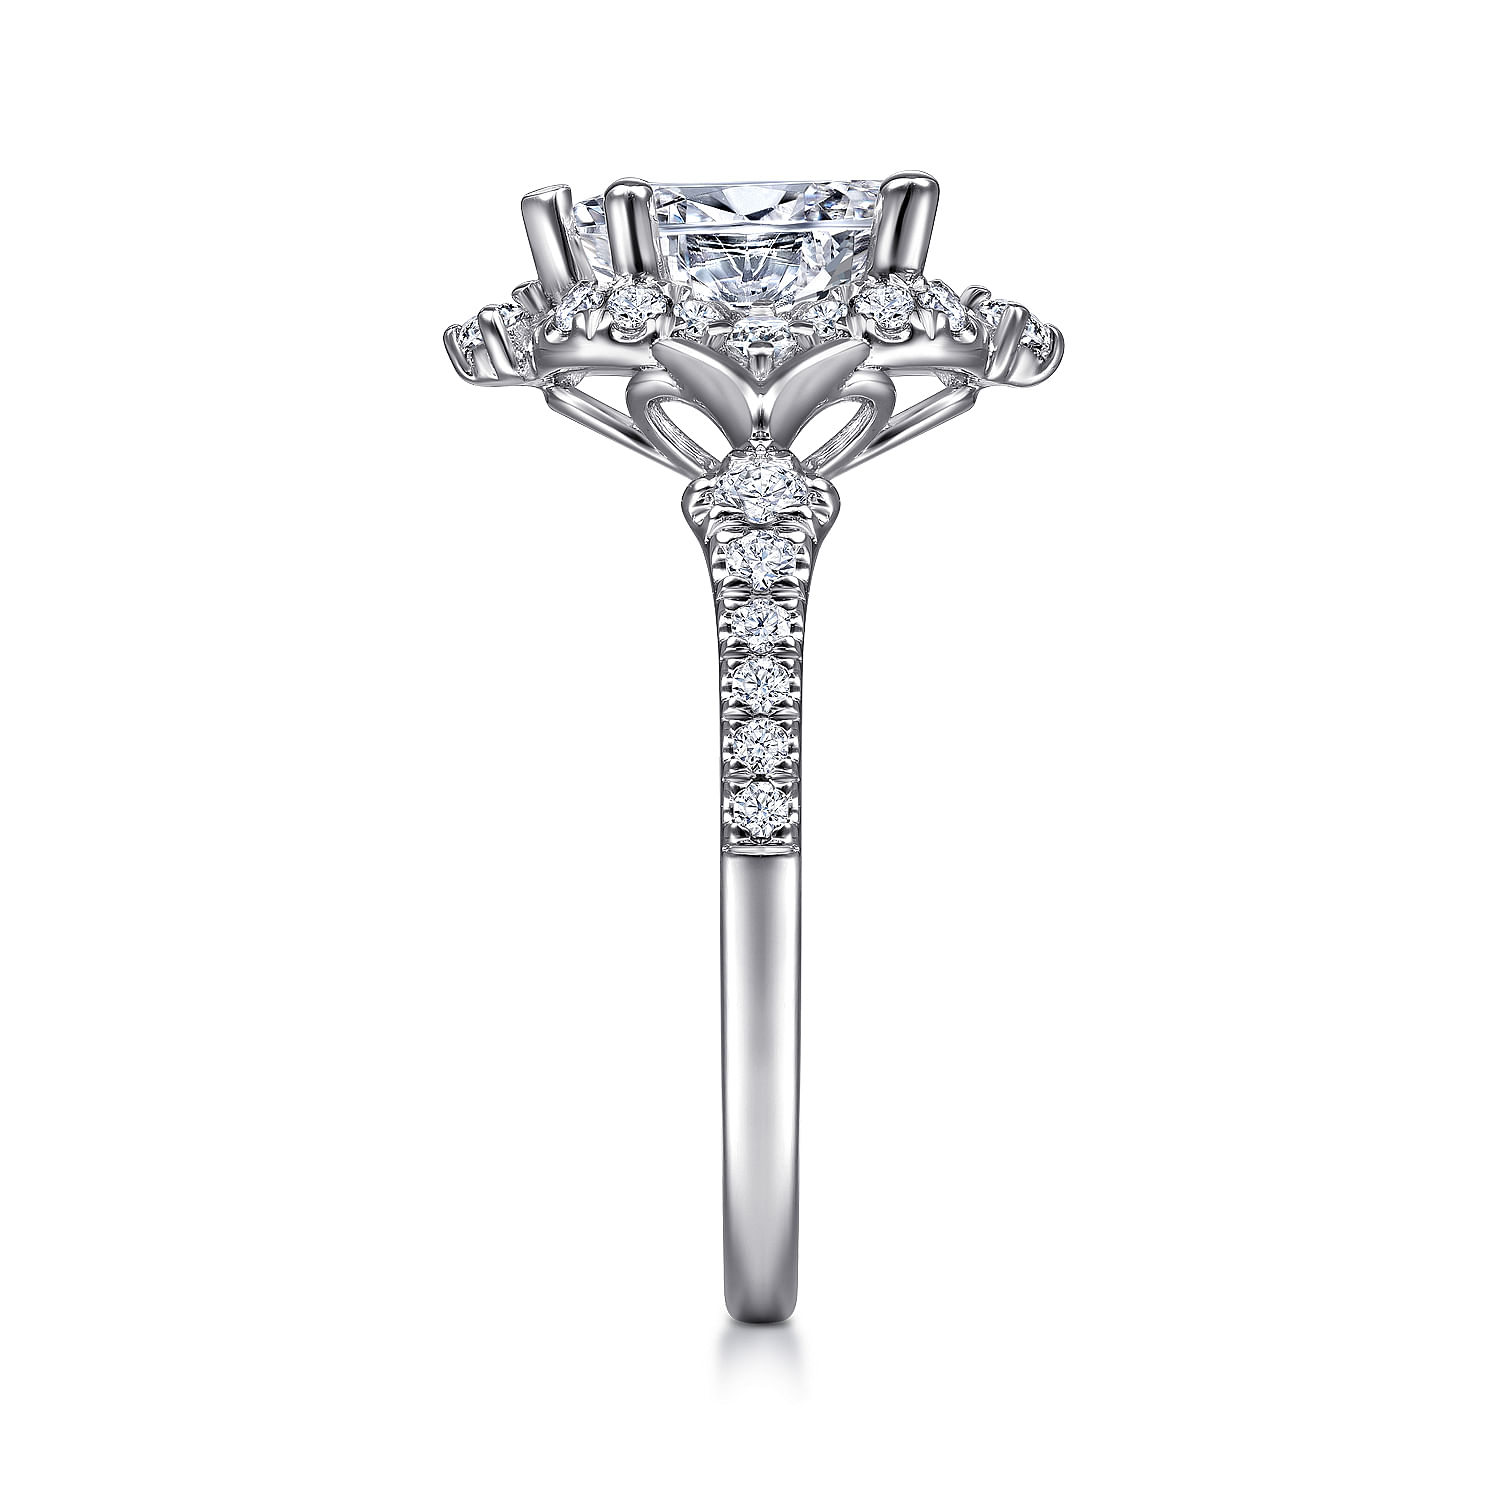 Unique 14K White Gold Vintage Inspired Pear Shape Halo Diamond Engagement Ring